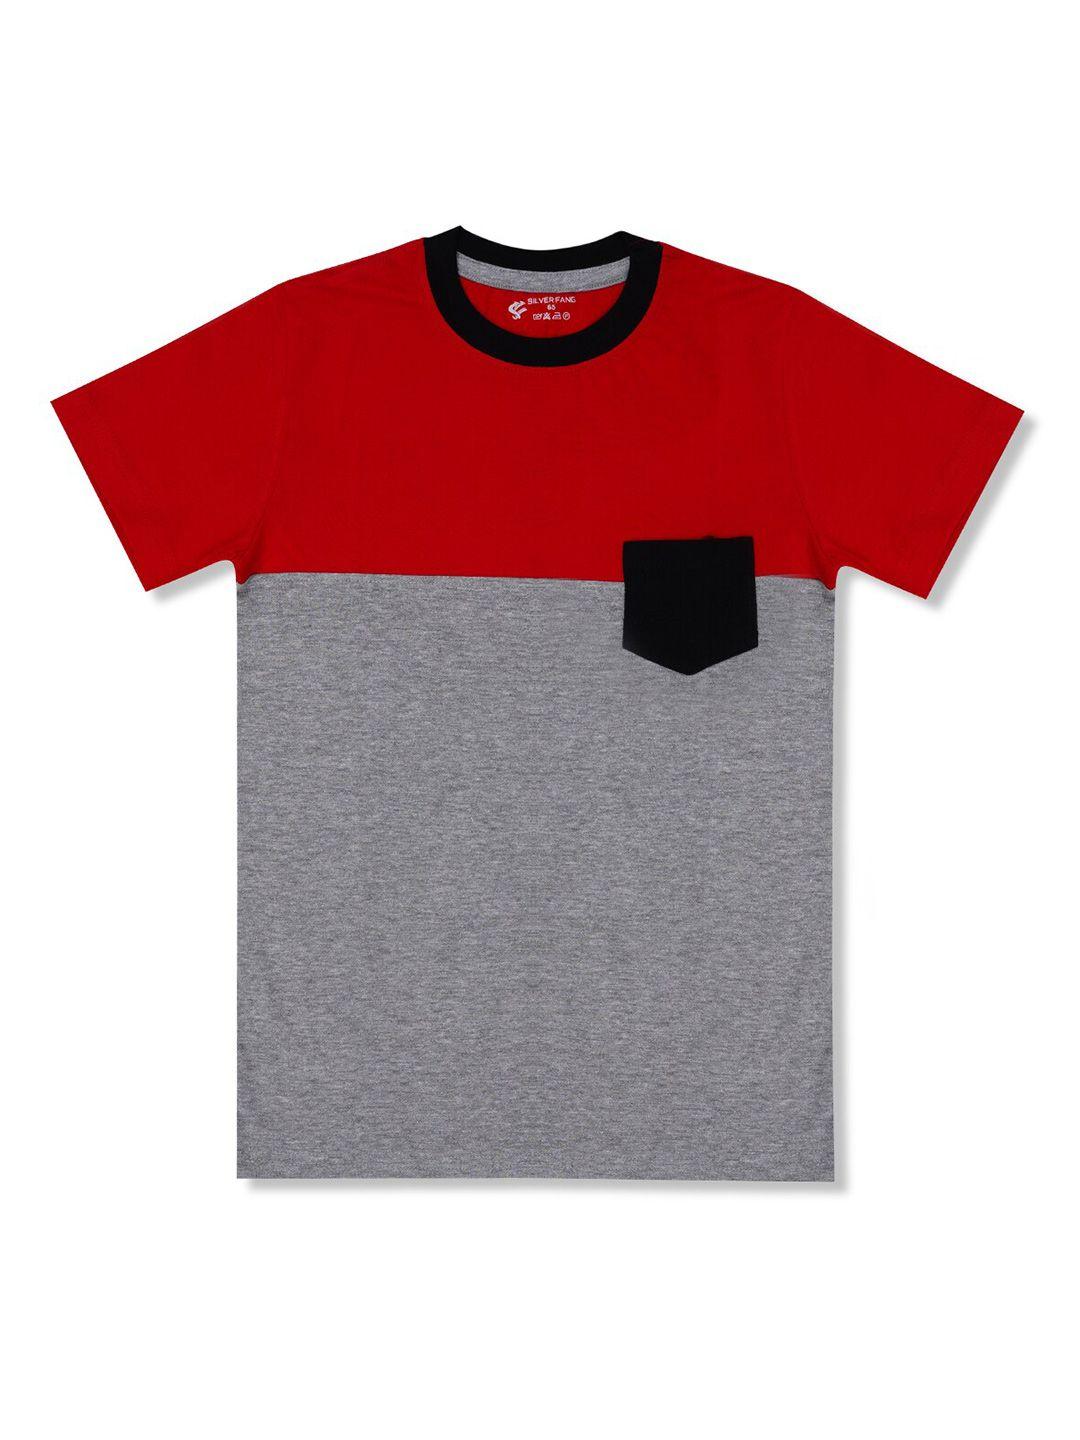 silver fang boys red & grey colourblocked t-shirt